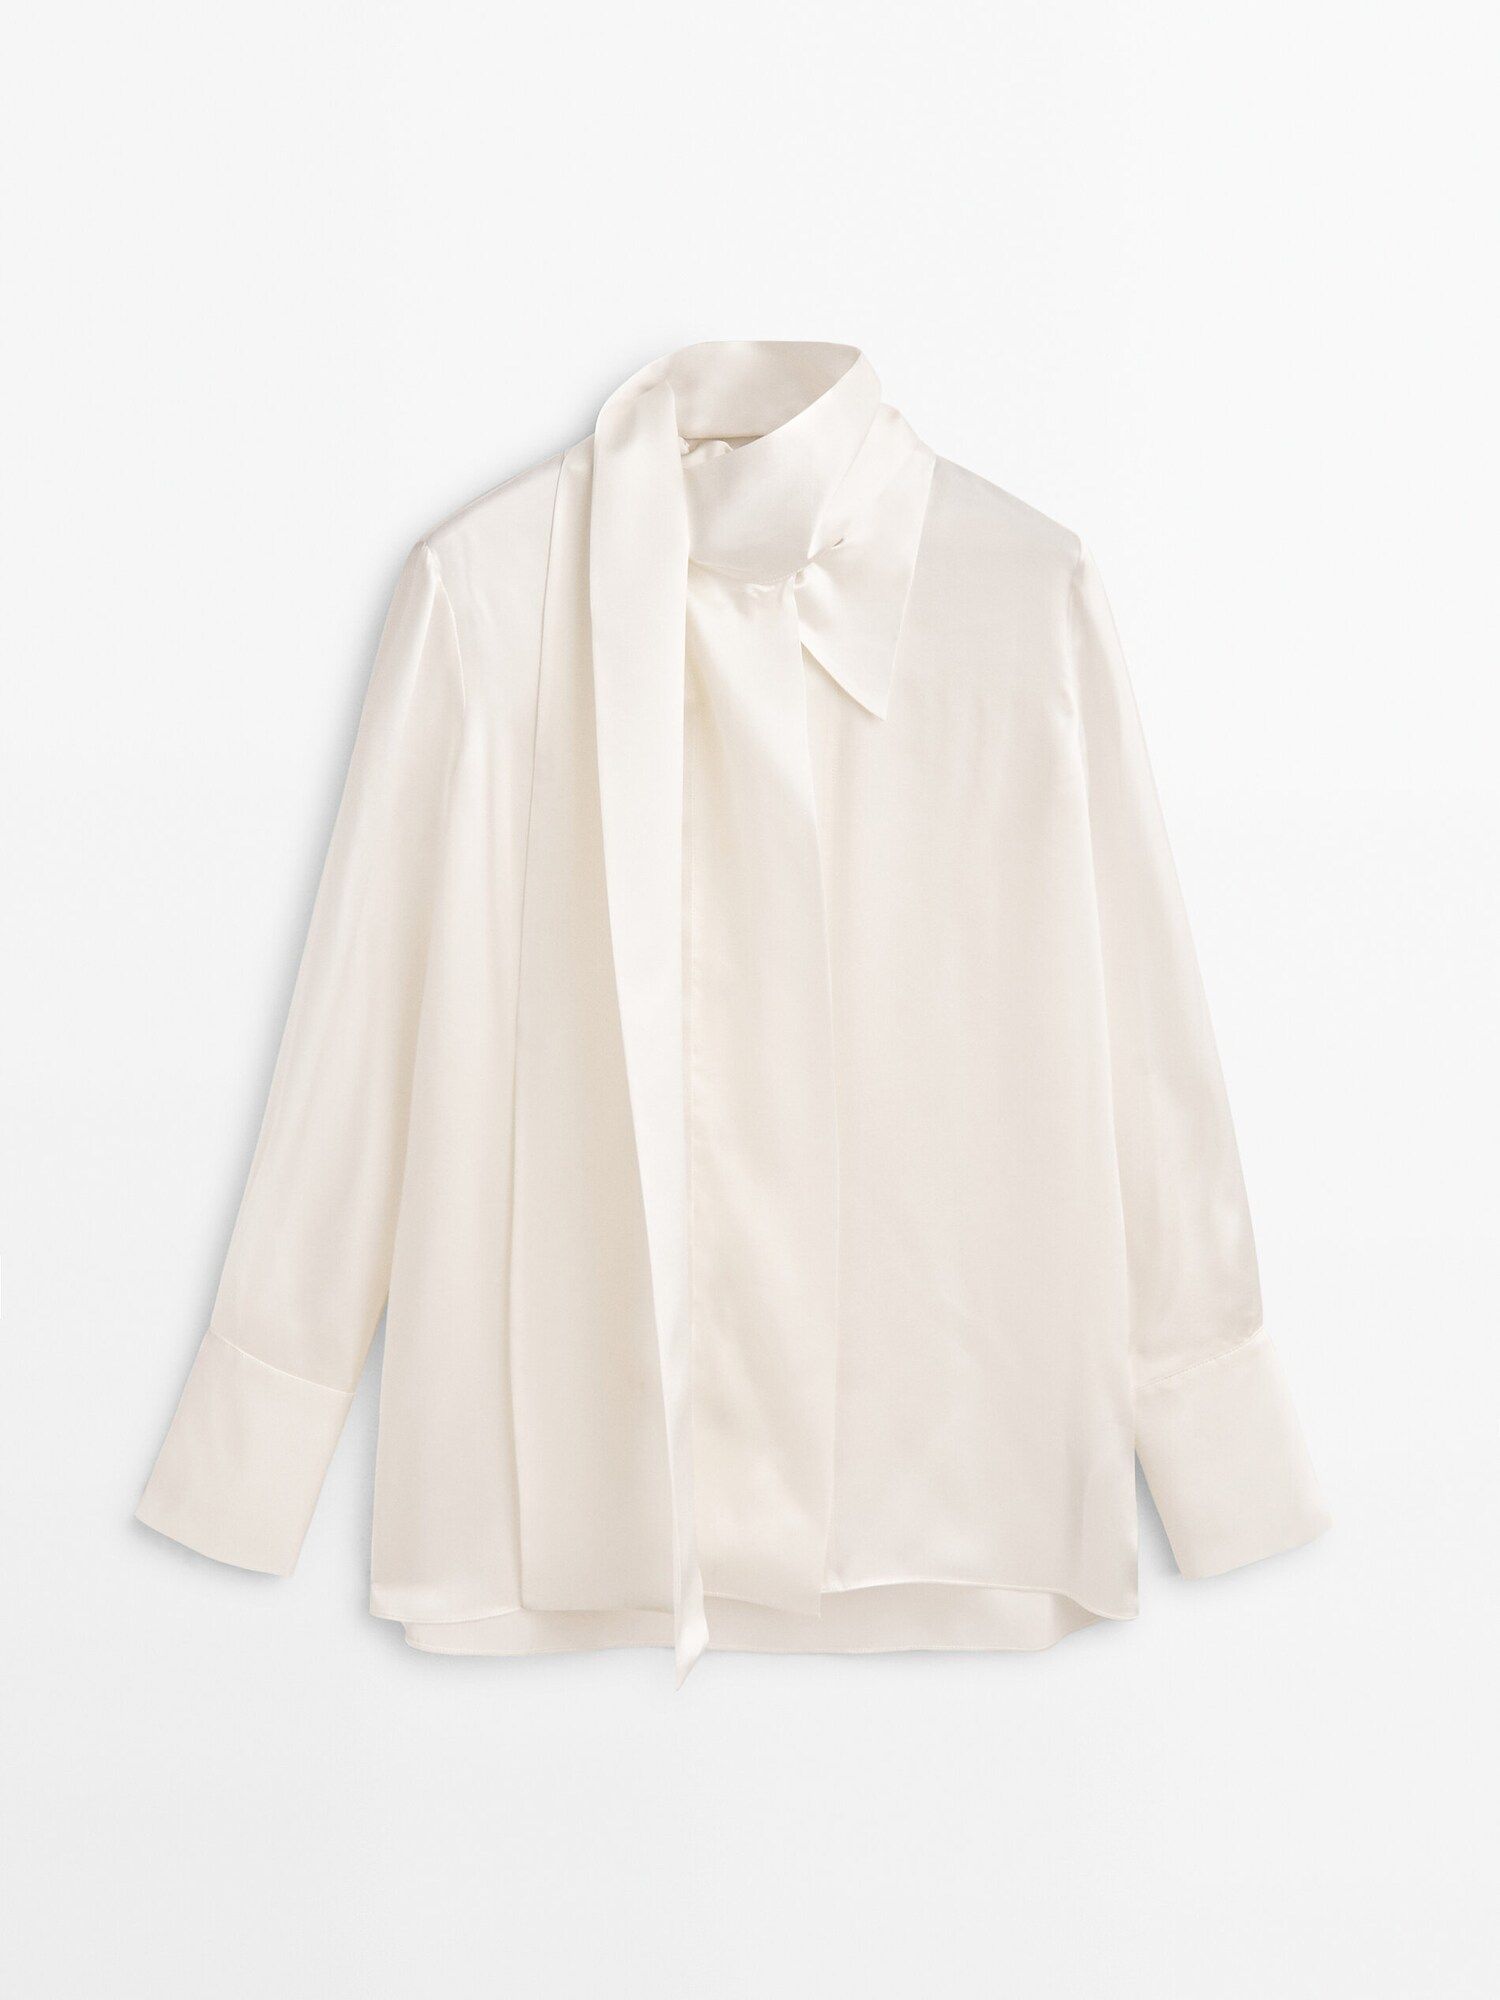 Silk shirt with tie detail - Studio | Massimo Dutti (US)